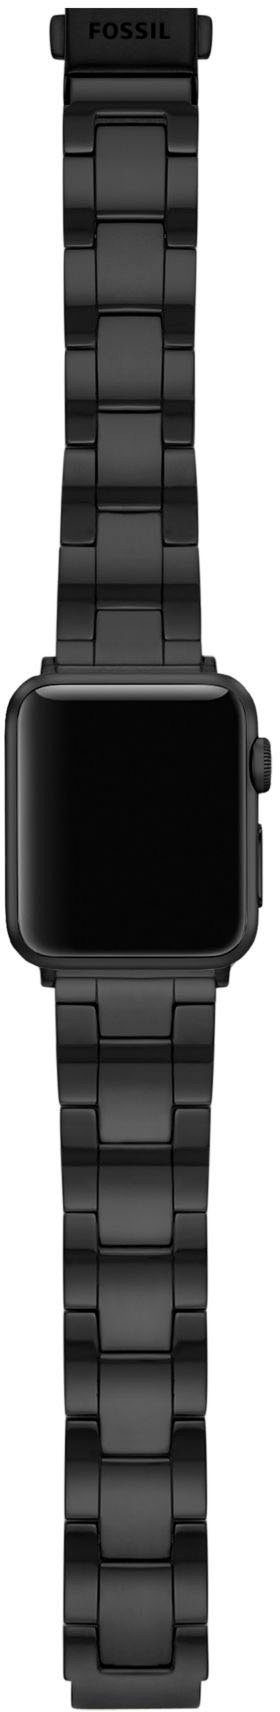 Apple auch ideal als Strap, Geschenk S380013, Smartwatch-Armband Fossil